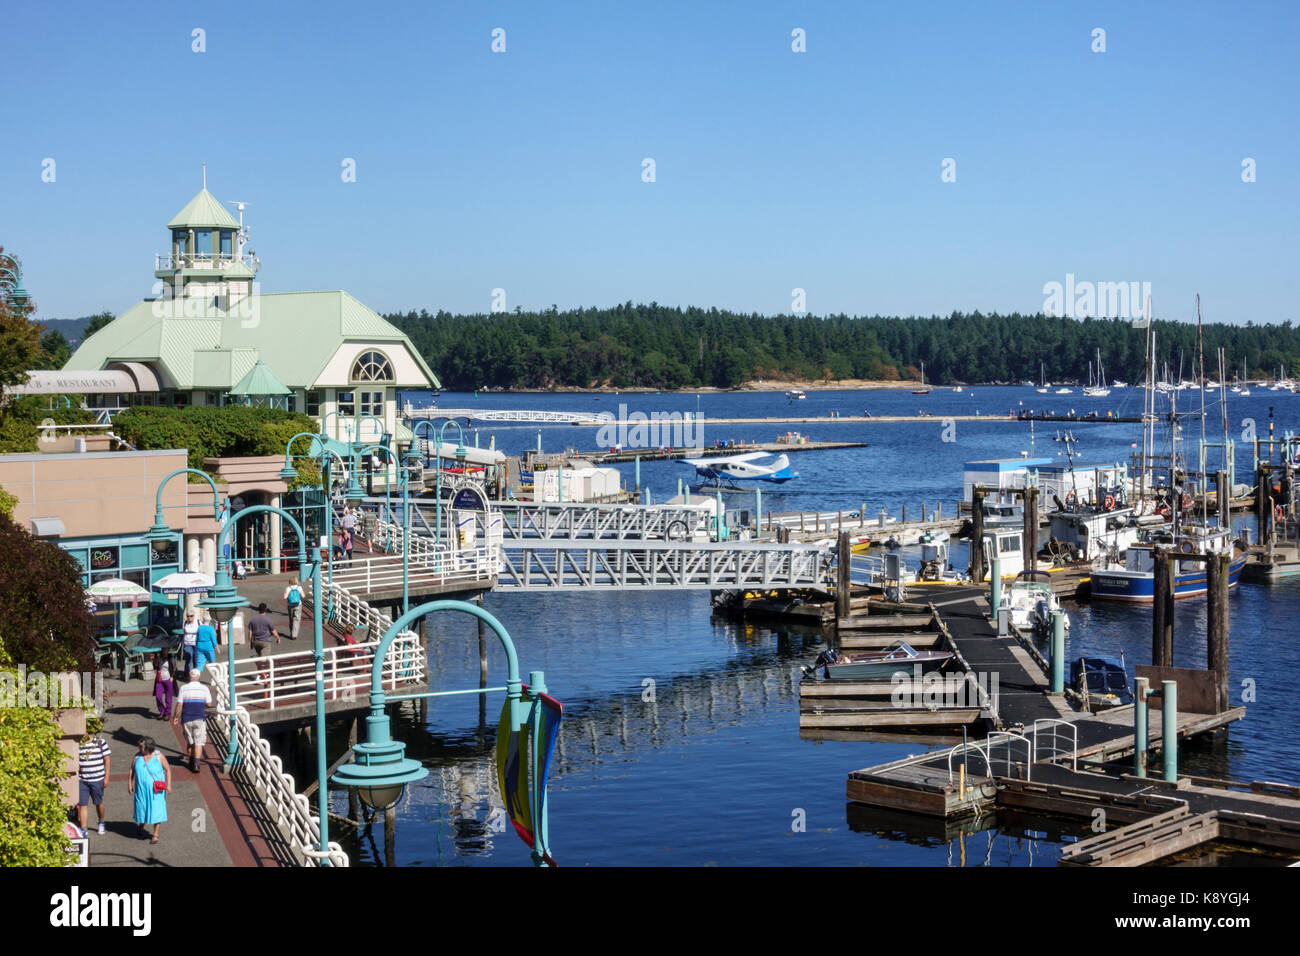 Public walkway and floating docks at Nanaimo boat basin waterfront, Vancouver Island, British Columbia, Canada Stock Photo